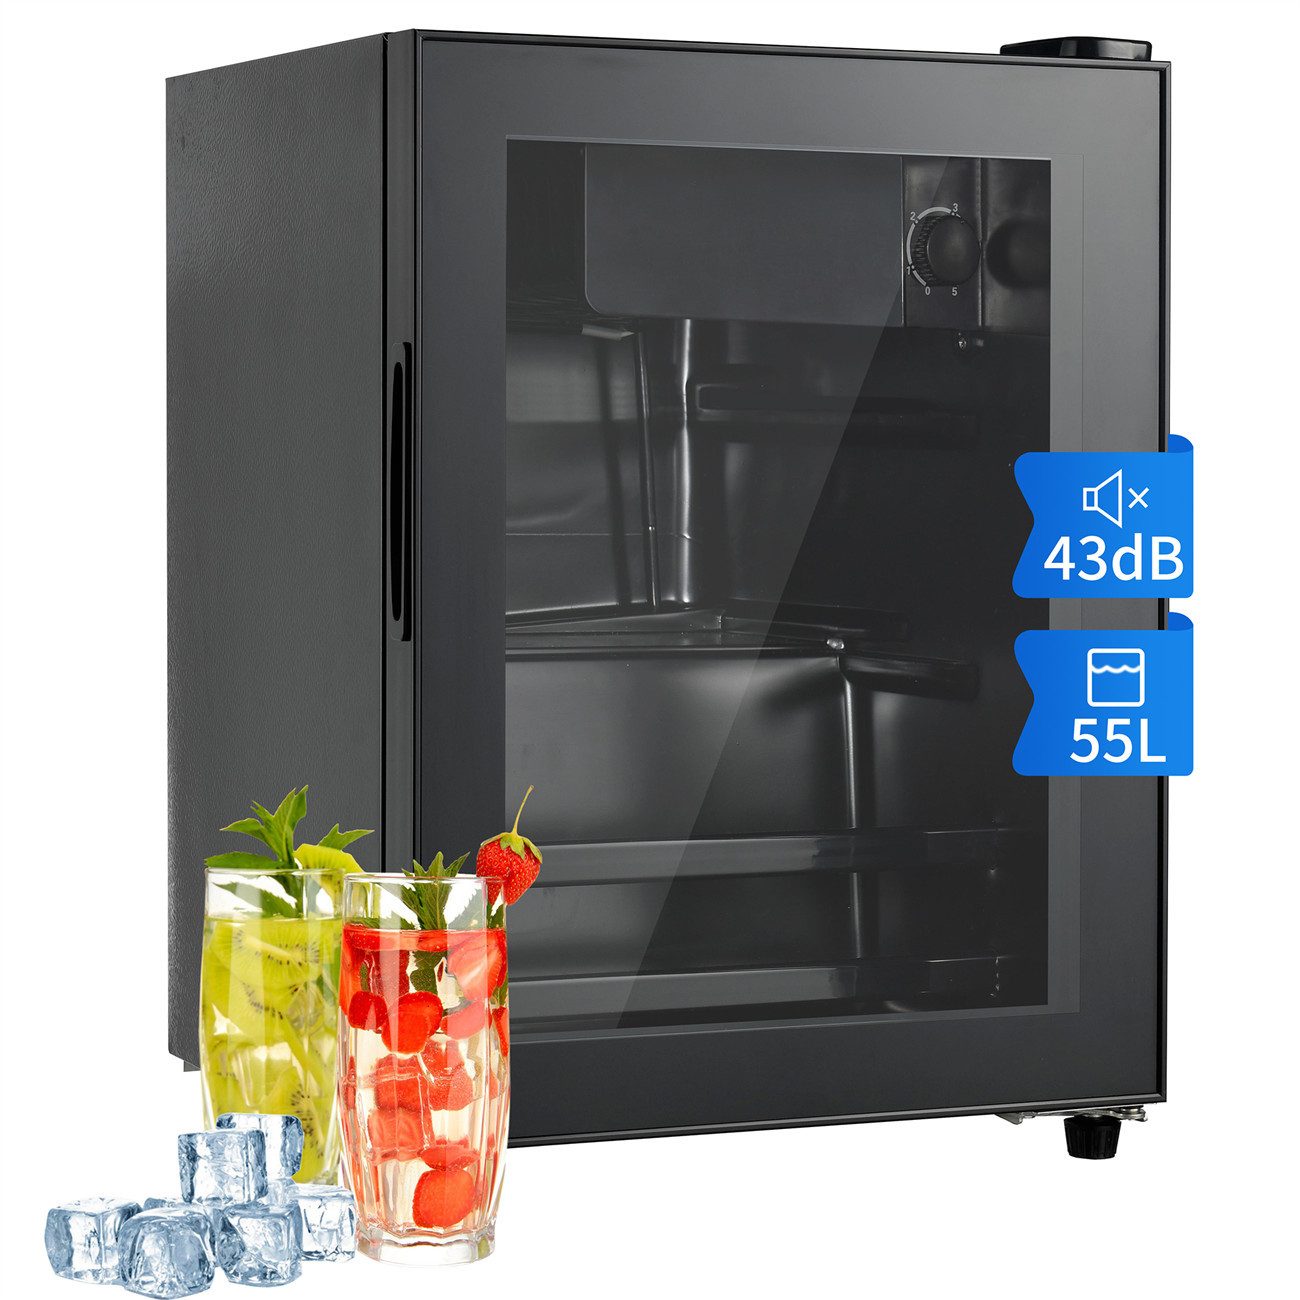 autolock Weinkühlschrank 55L-Minikühlschrank, 3L-Gefrierschrank + 52L-Kühlschrank,Leiser Betrieb,Kompressor-Kühlsystem,energieeffizient,42 dB max